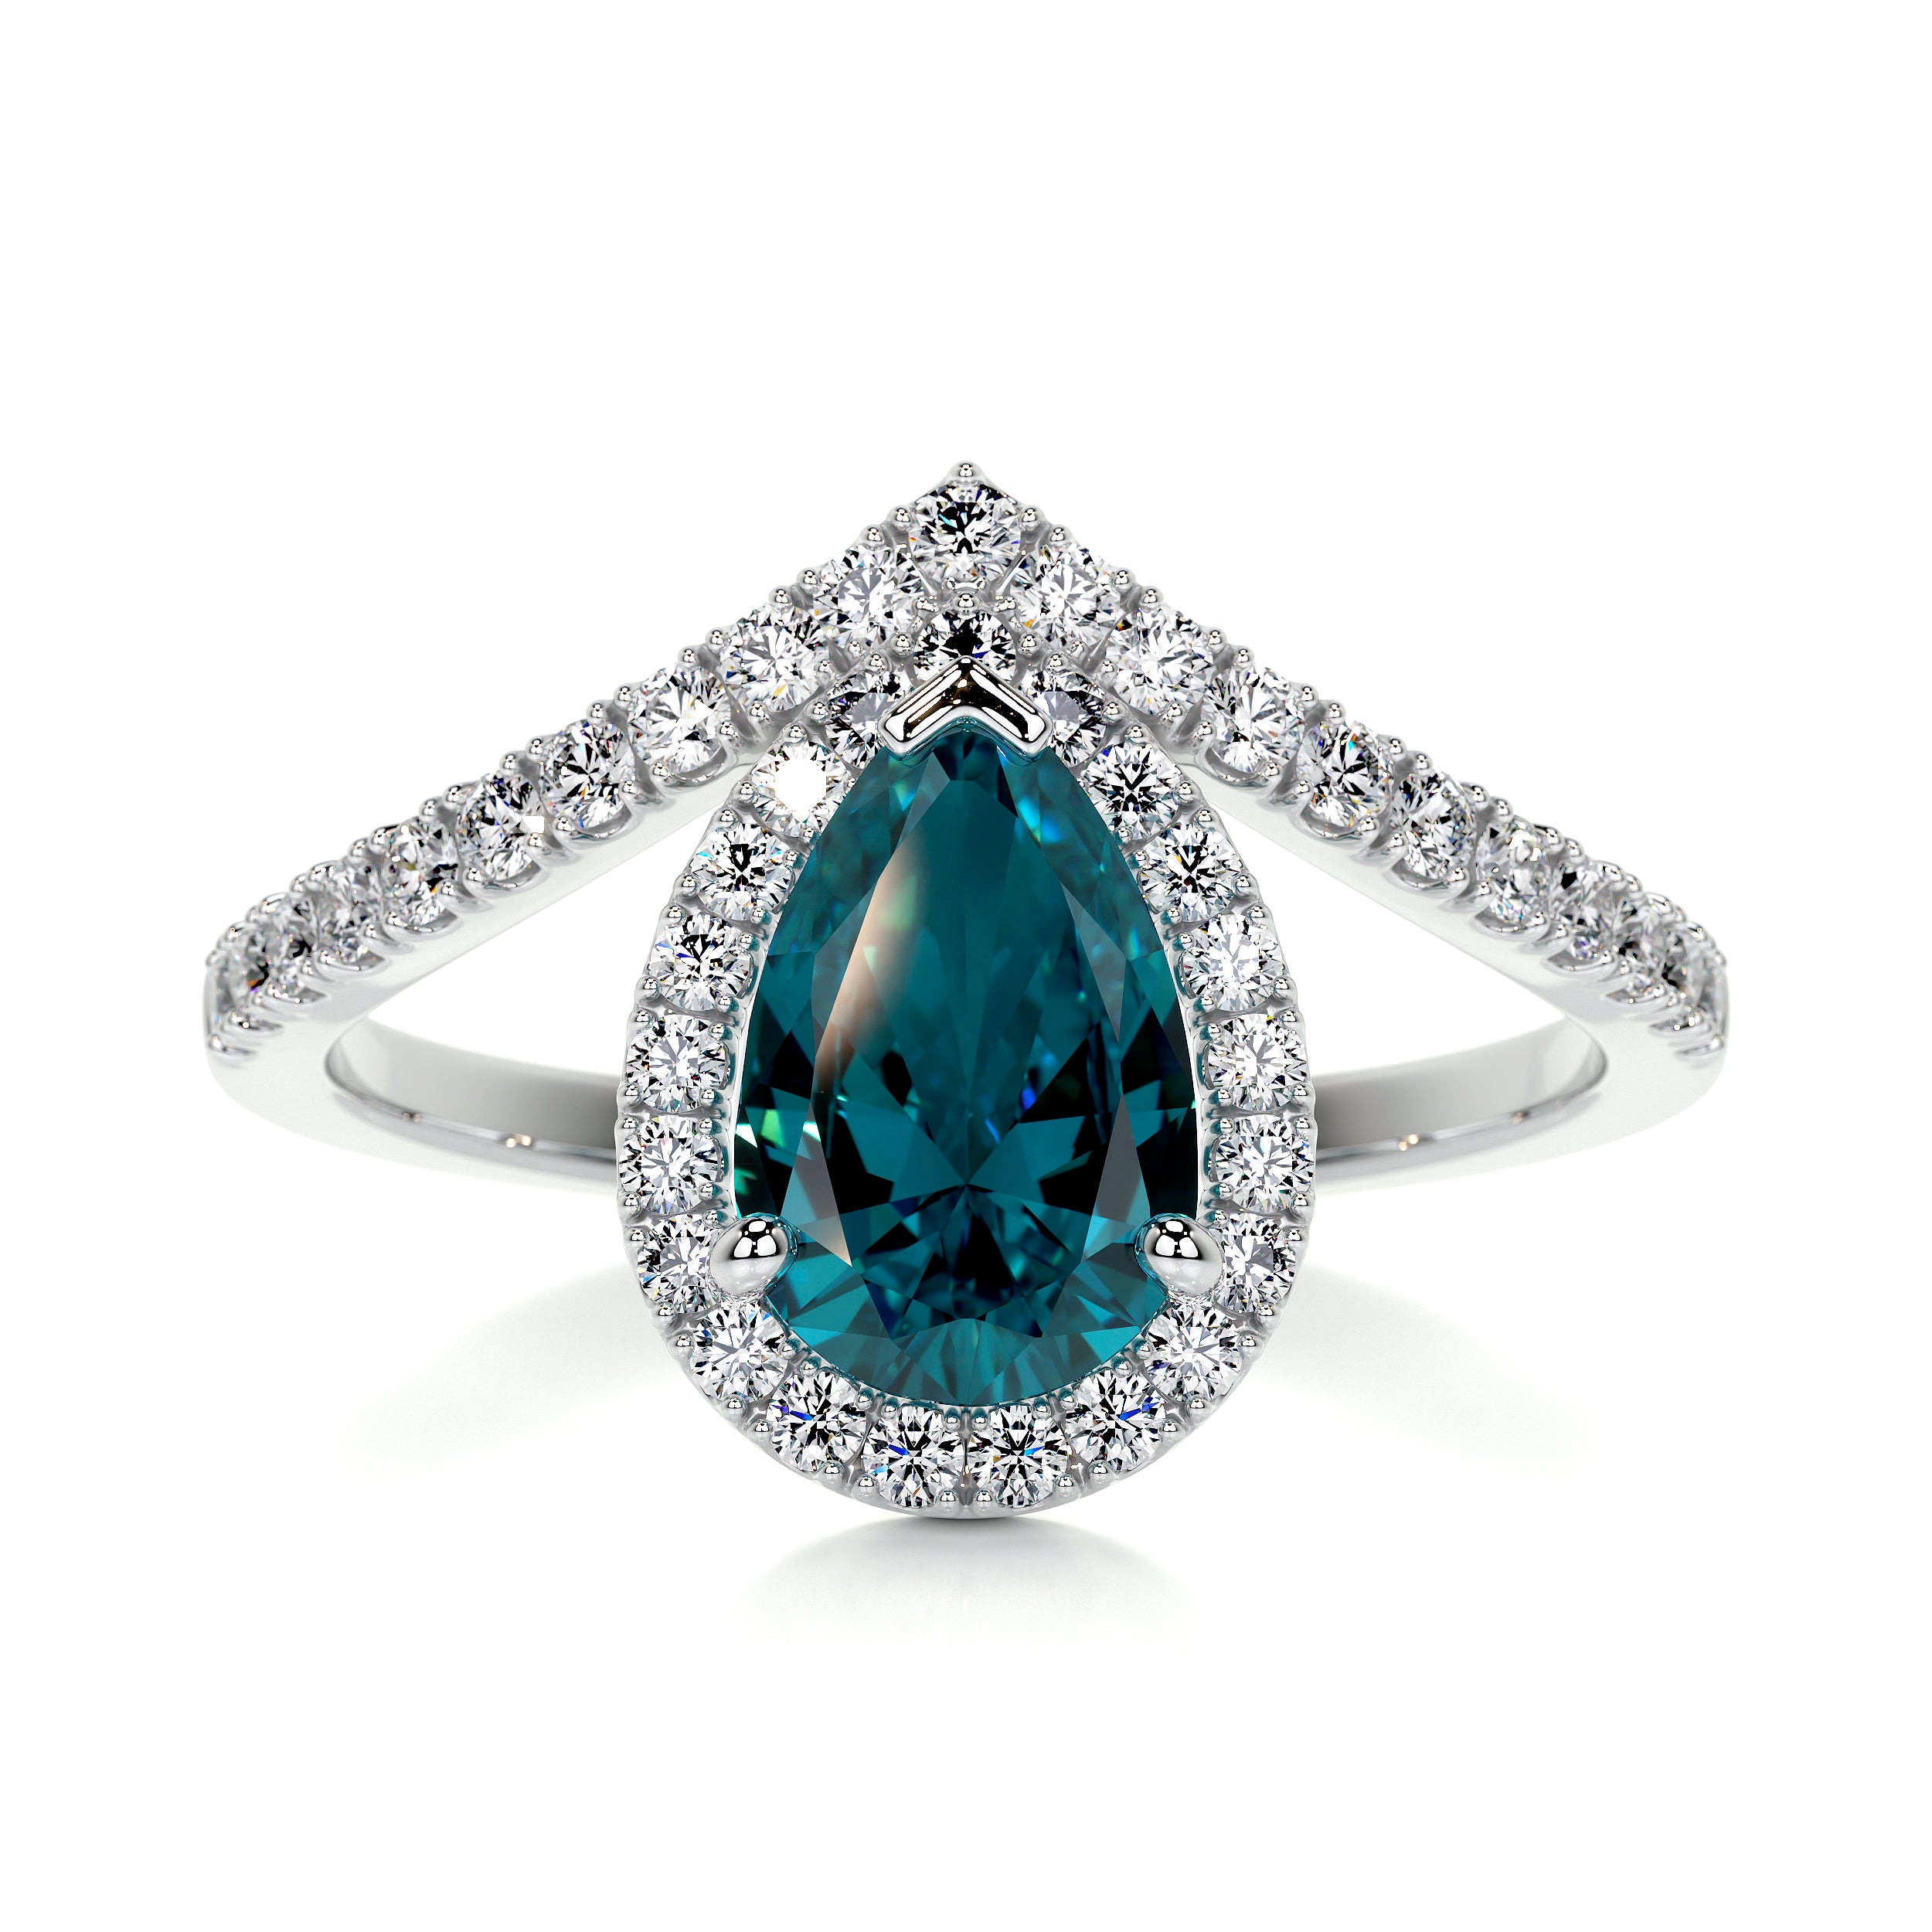 Miranda Diamond Engagement Ring -18K White Gold